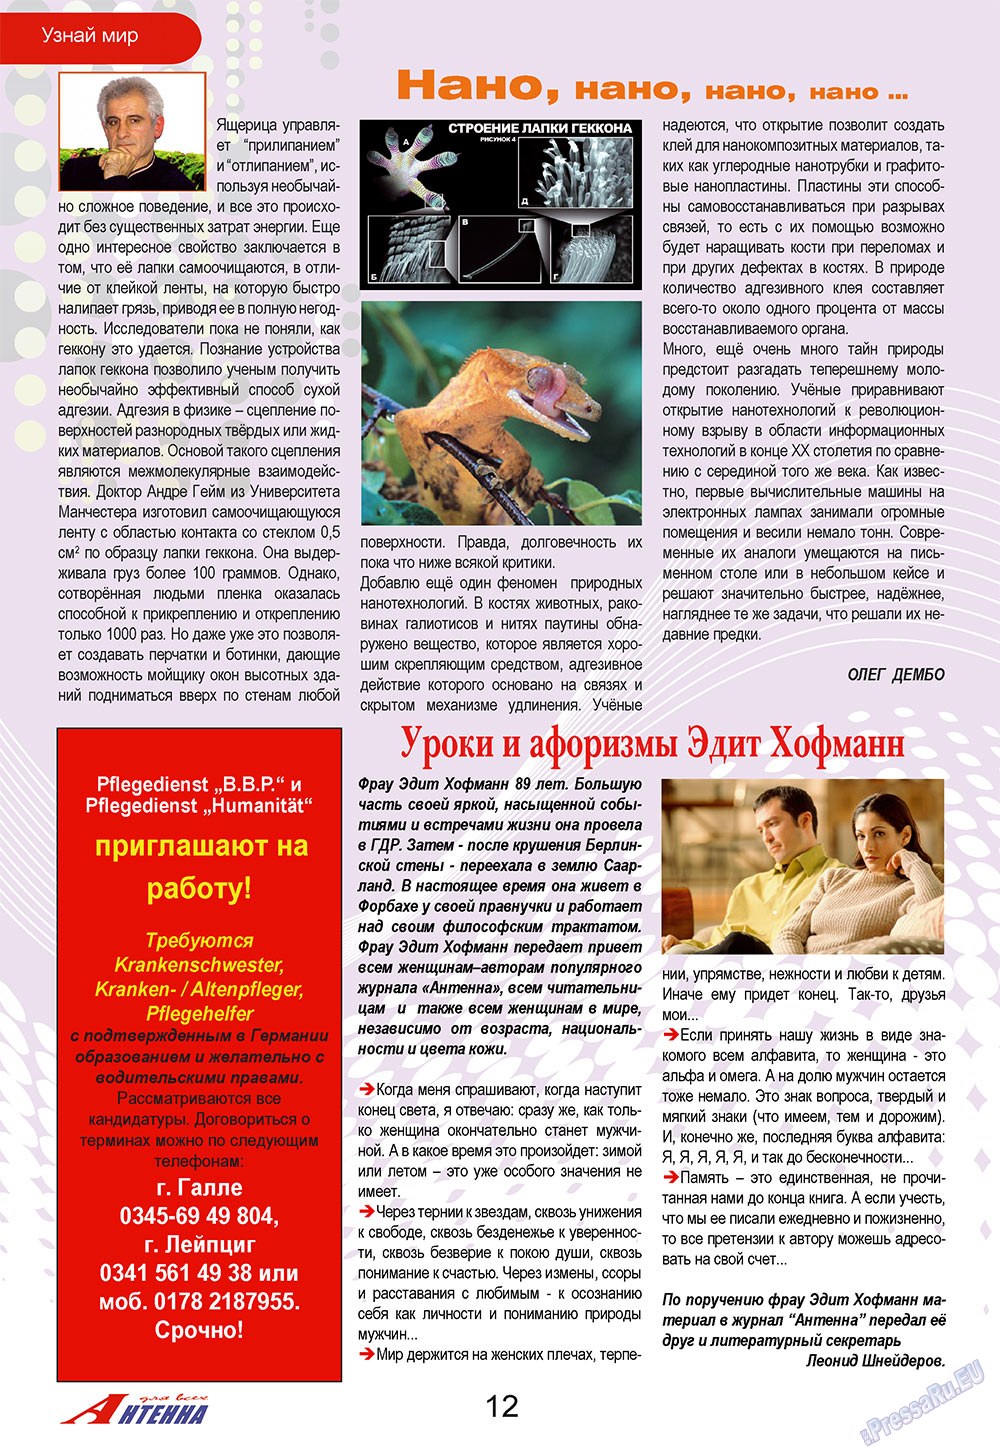 Антенна (журнал). 2009 год, номер 4, стр. 12